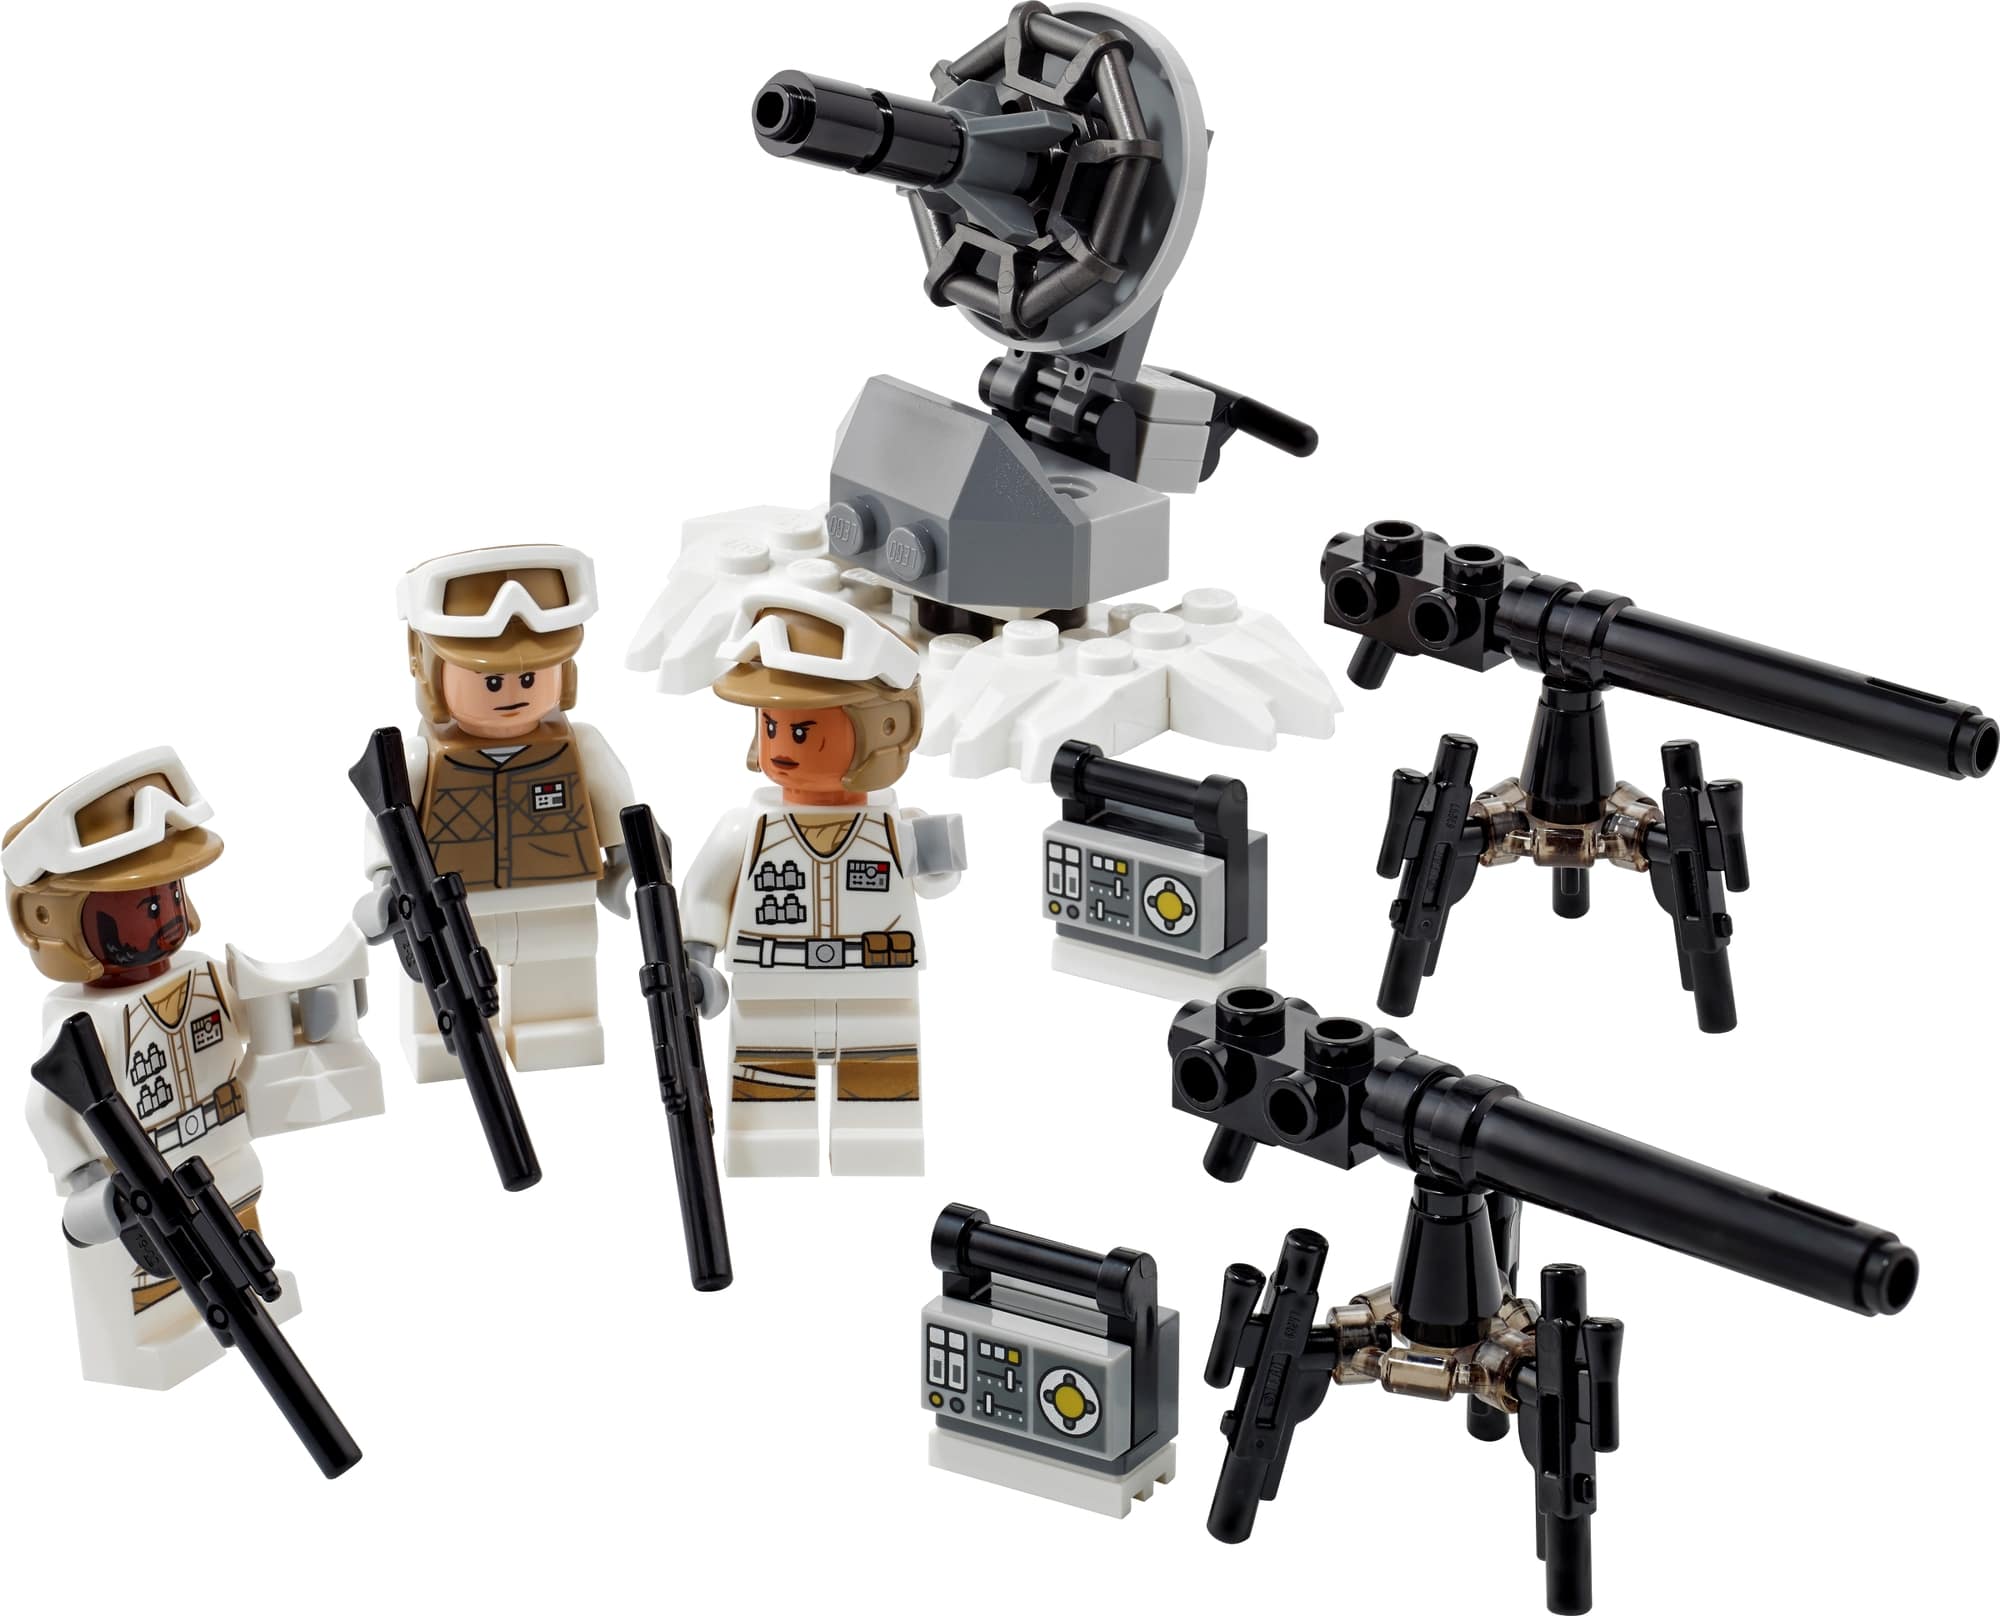 NEU LEGO Star Wars Figur Naboo Figther Pilot mit Waffe 